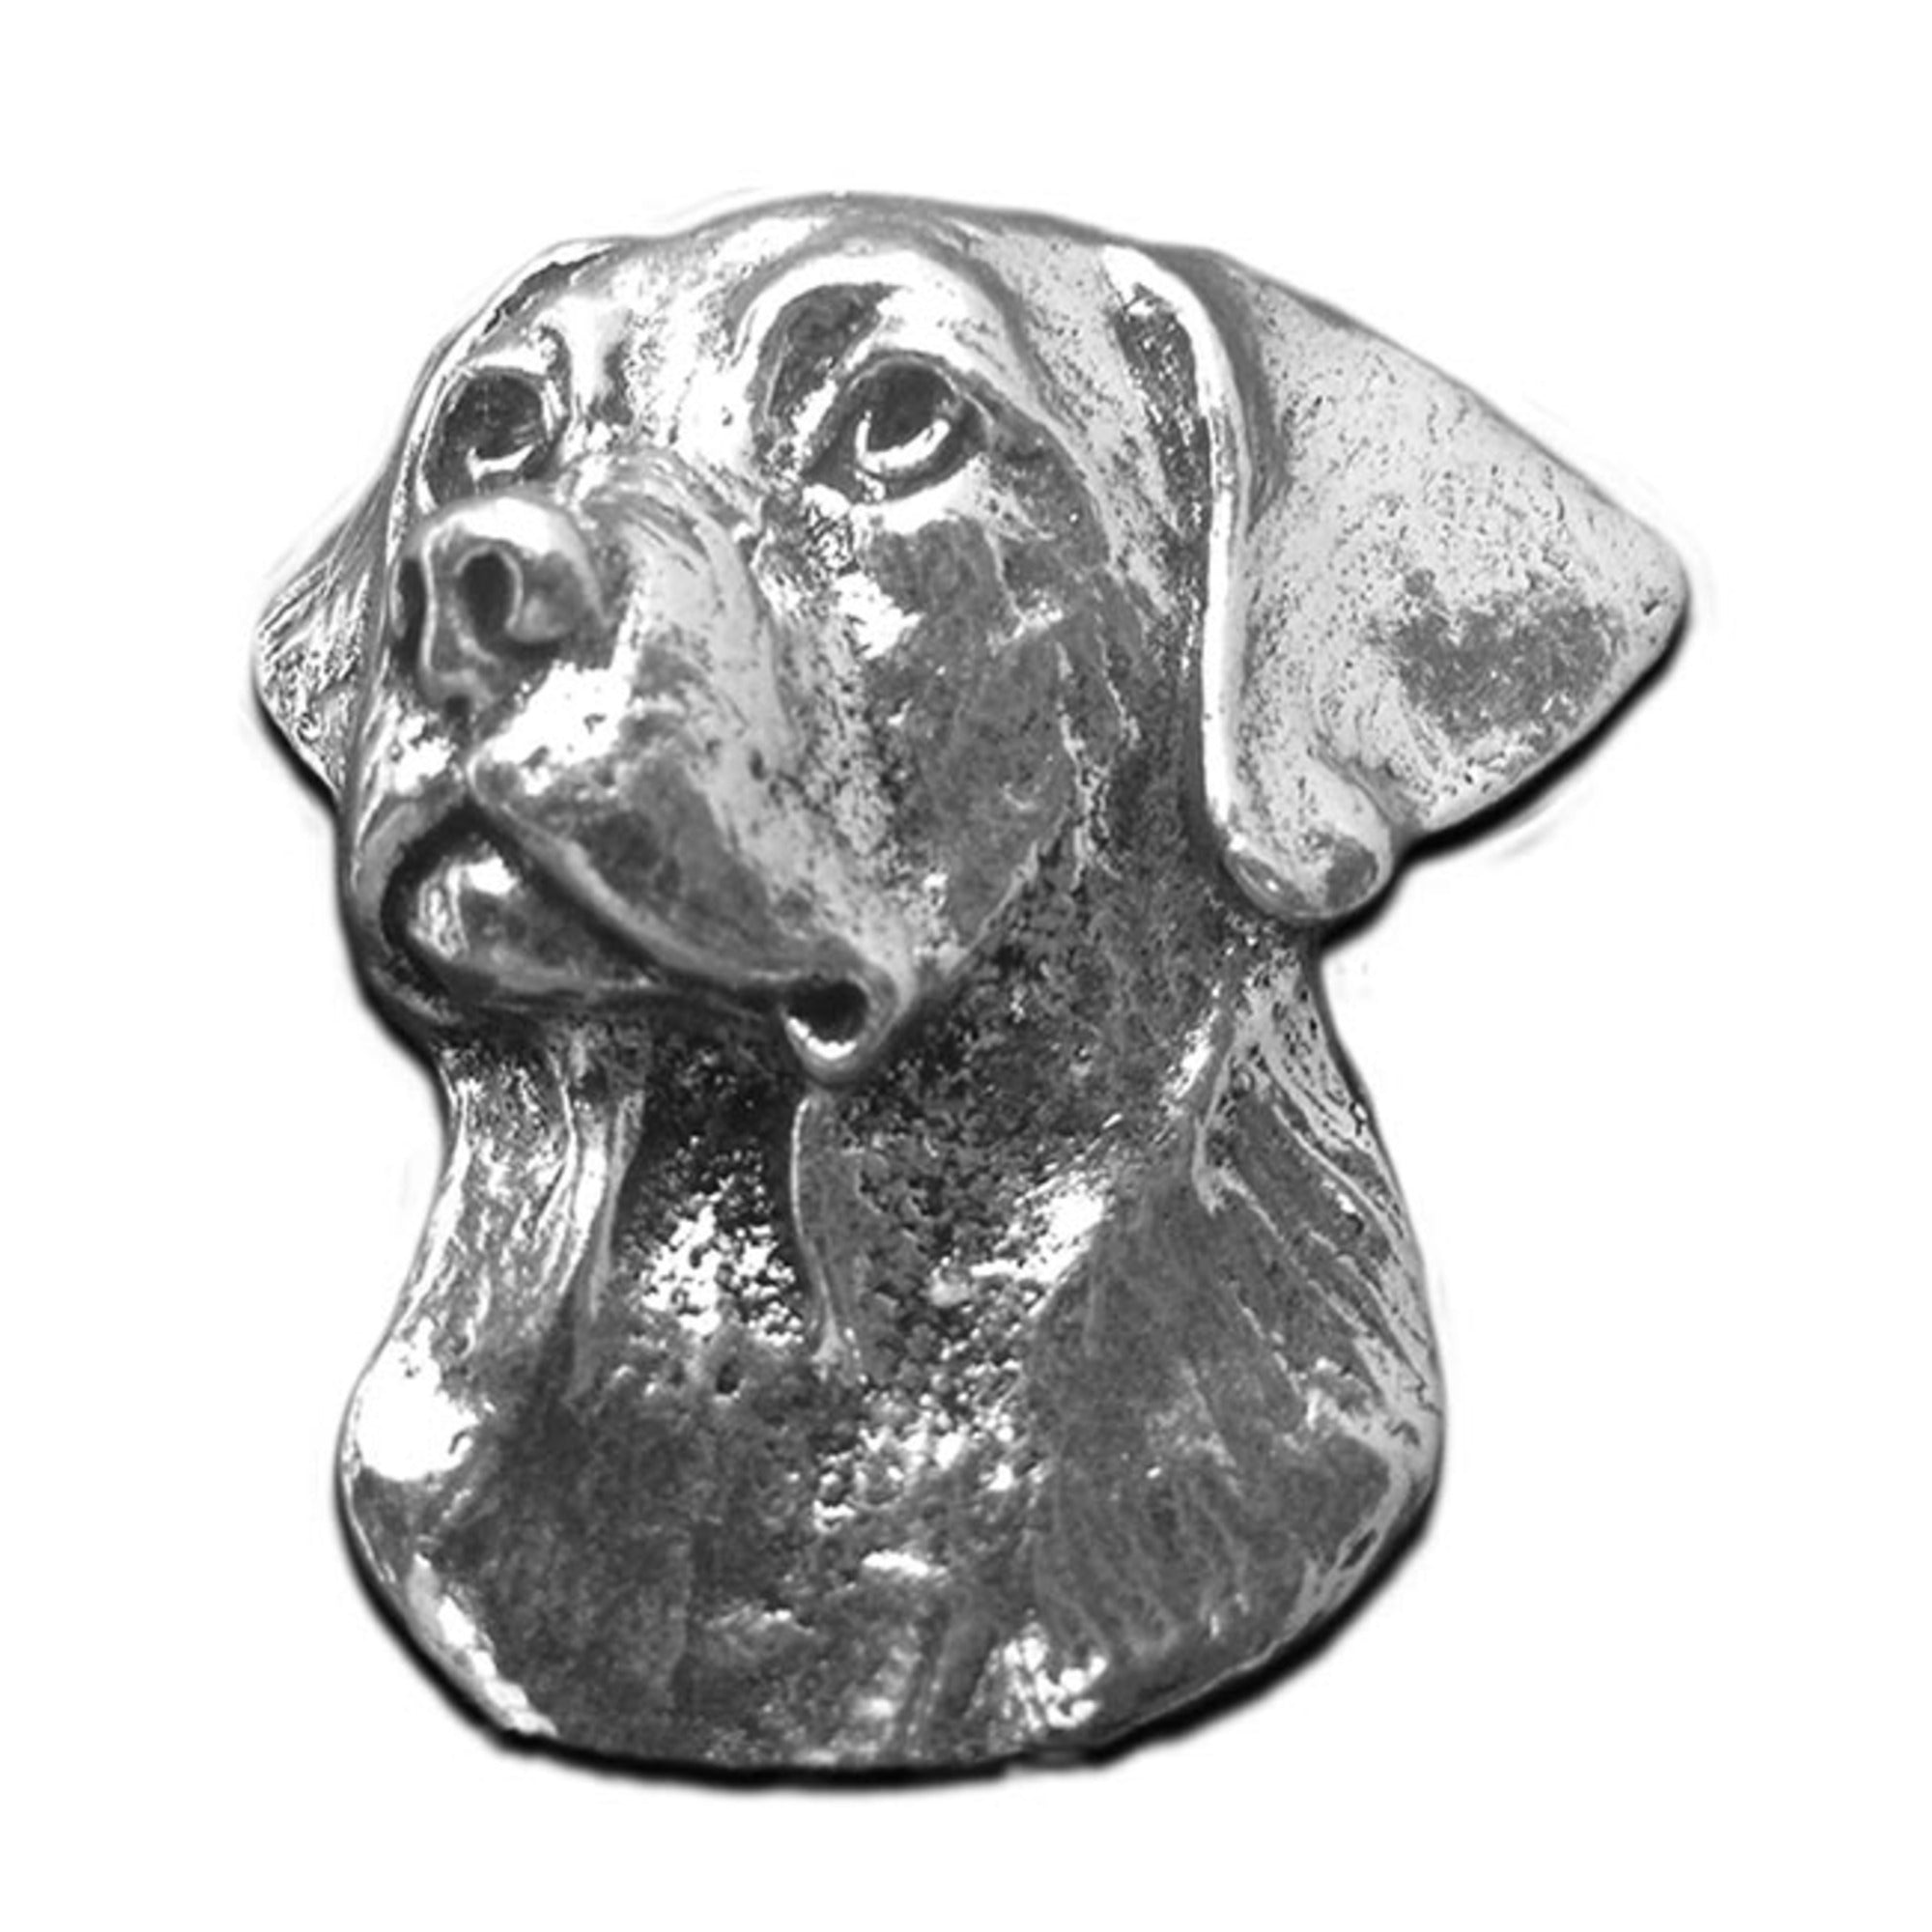 New-Spin Metal Casting Labrador Magnet